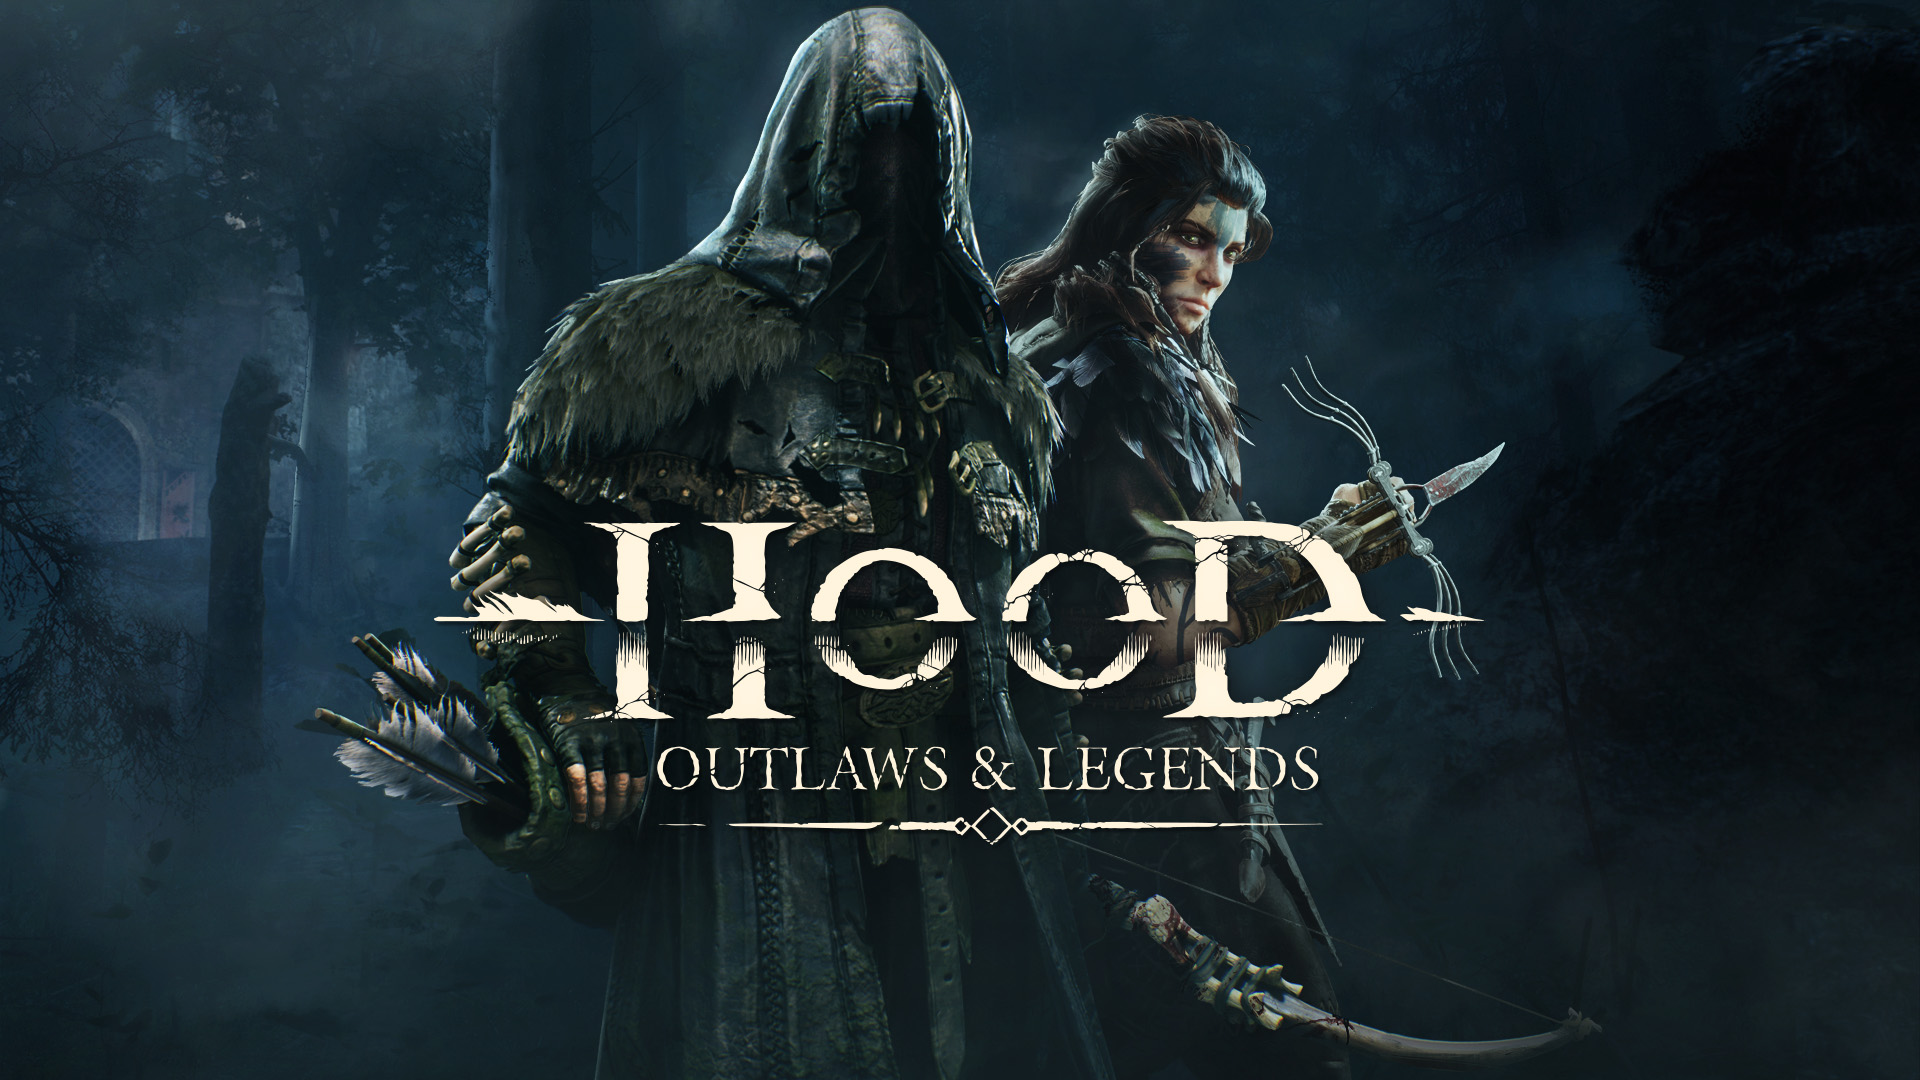 Hood: Outlaws & Legends game characters in HD desktop wallpaper.